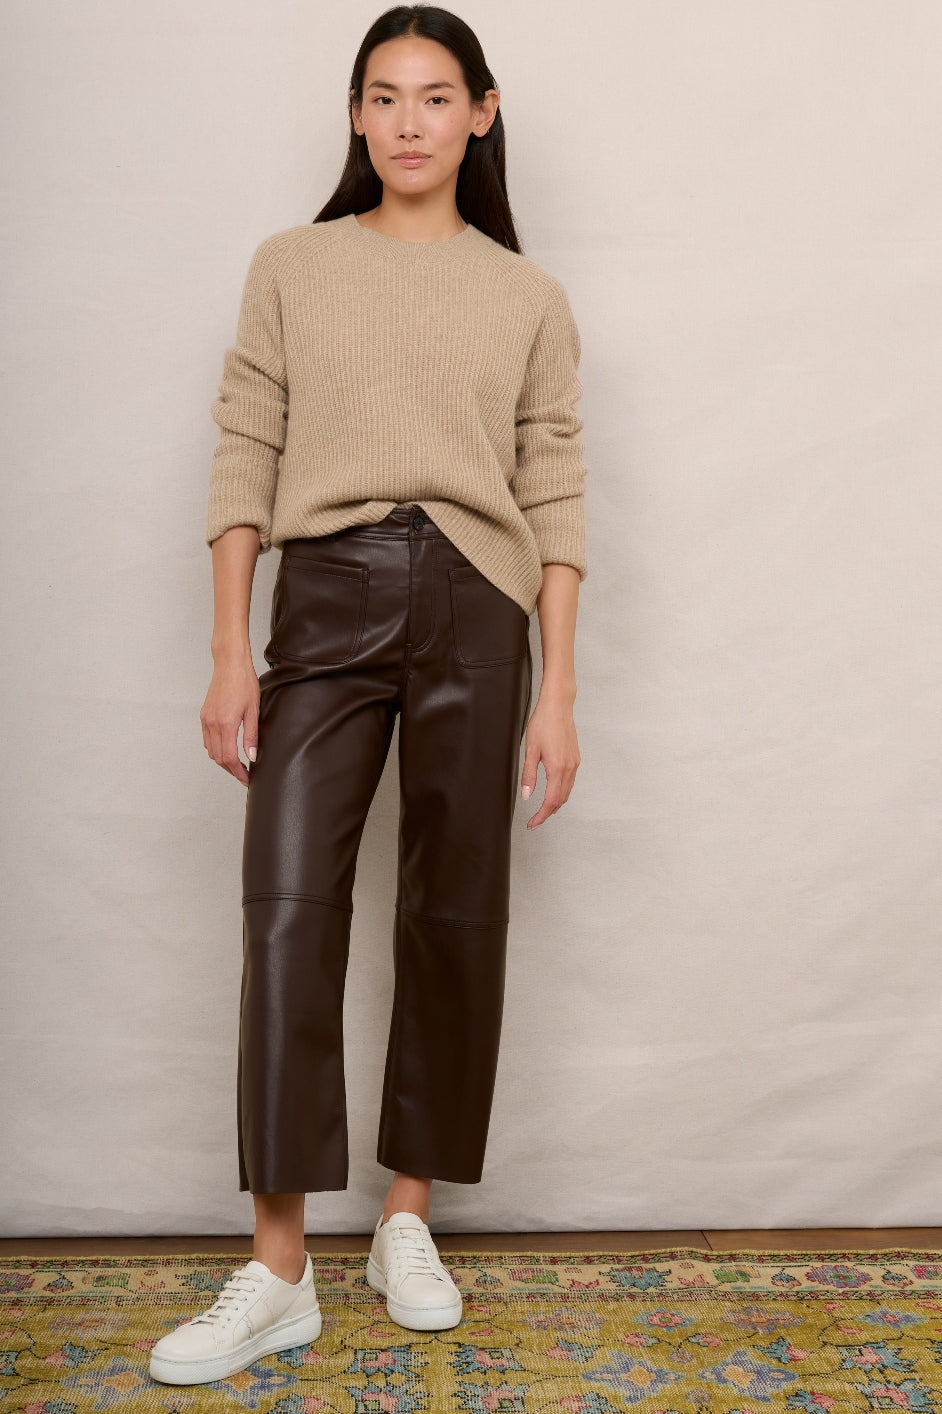 Anniston Leather Pant in Charcoal | MARISSA WEBB | MARISSA WEBB